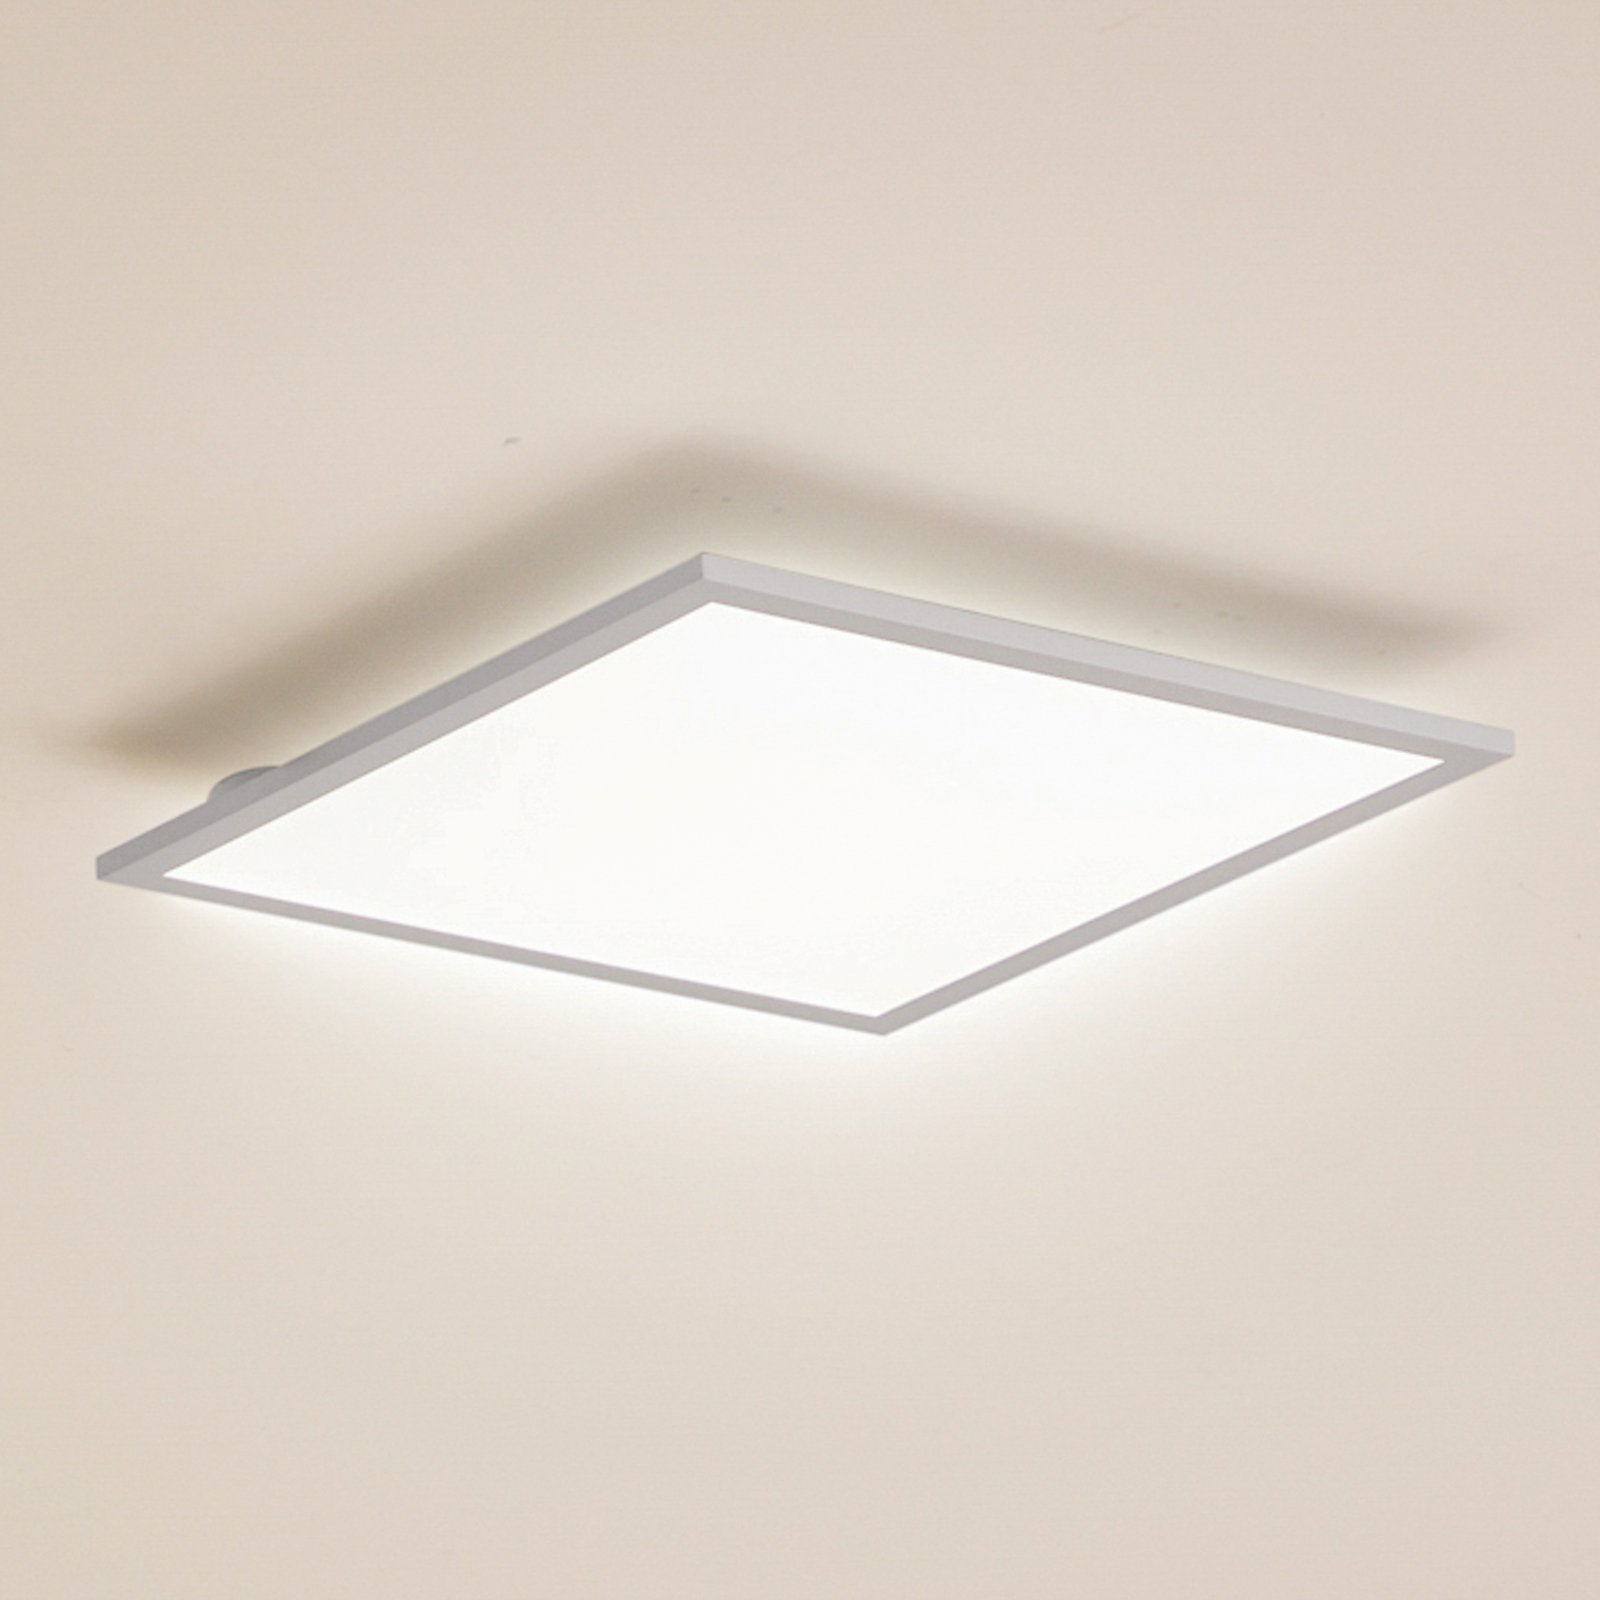 Lindby Painel LED Enhife, branco, 39,5 x 39,5 cm, alumínio